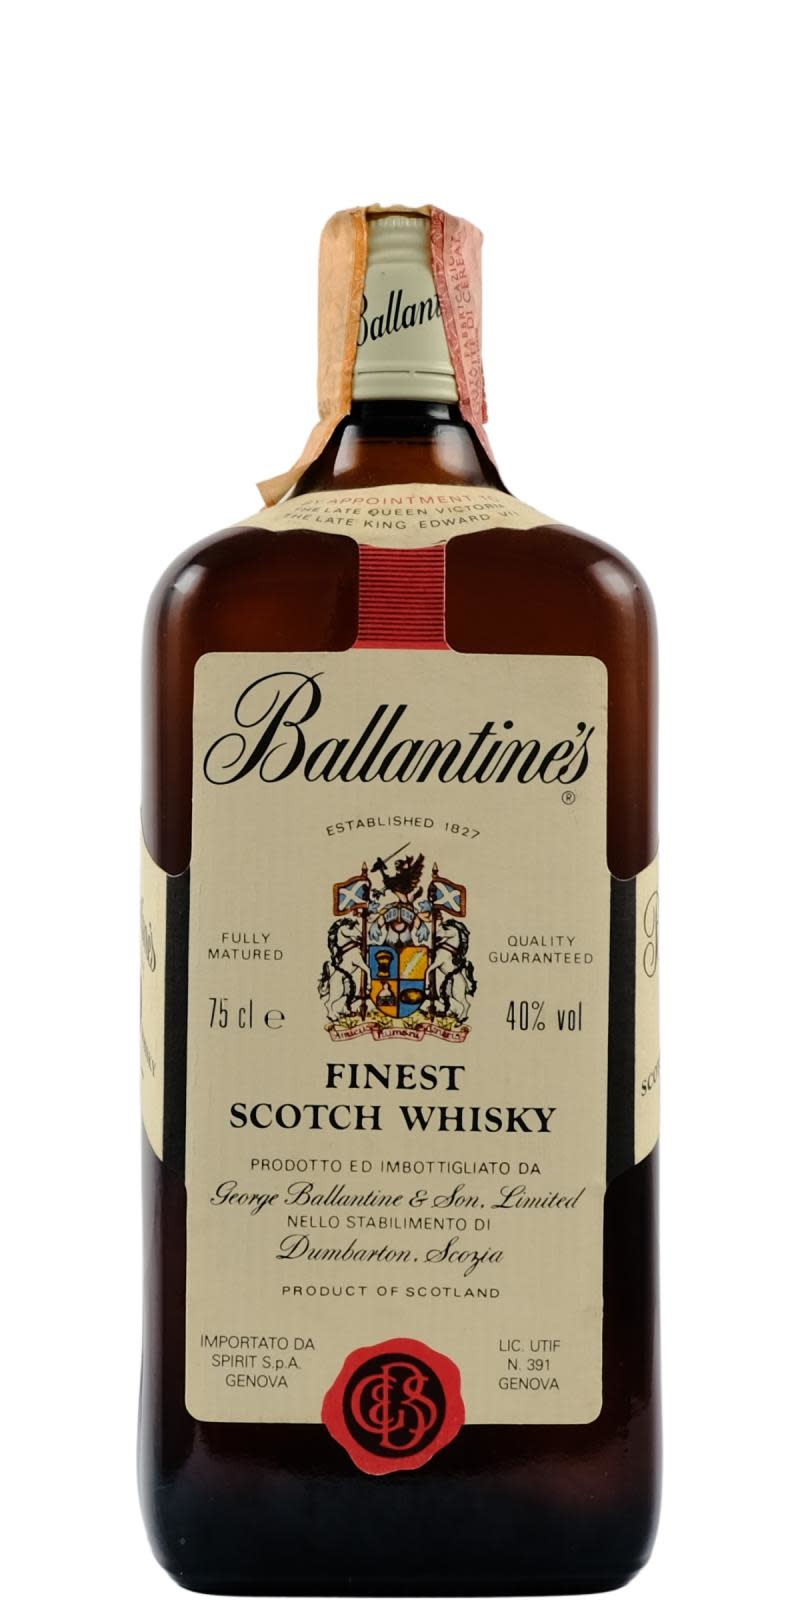 Ballantine's Finest Scotch Whisky George Ballantine & Son